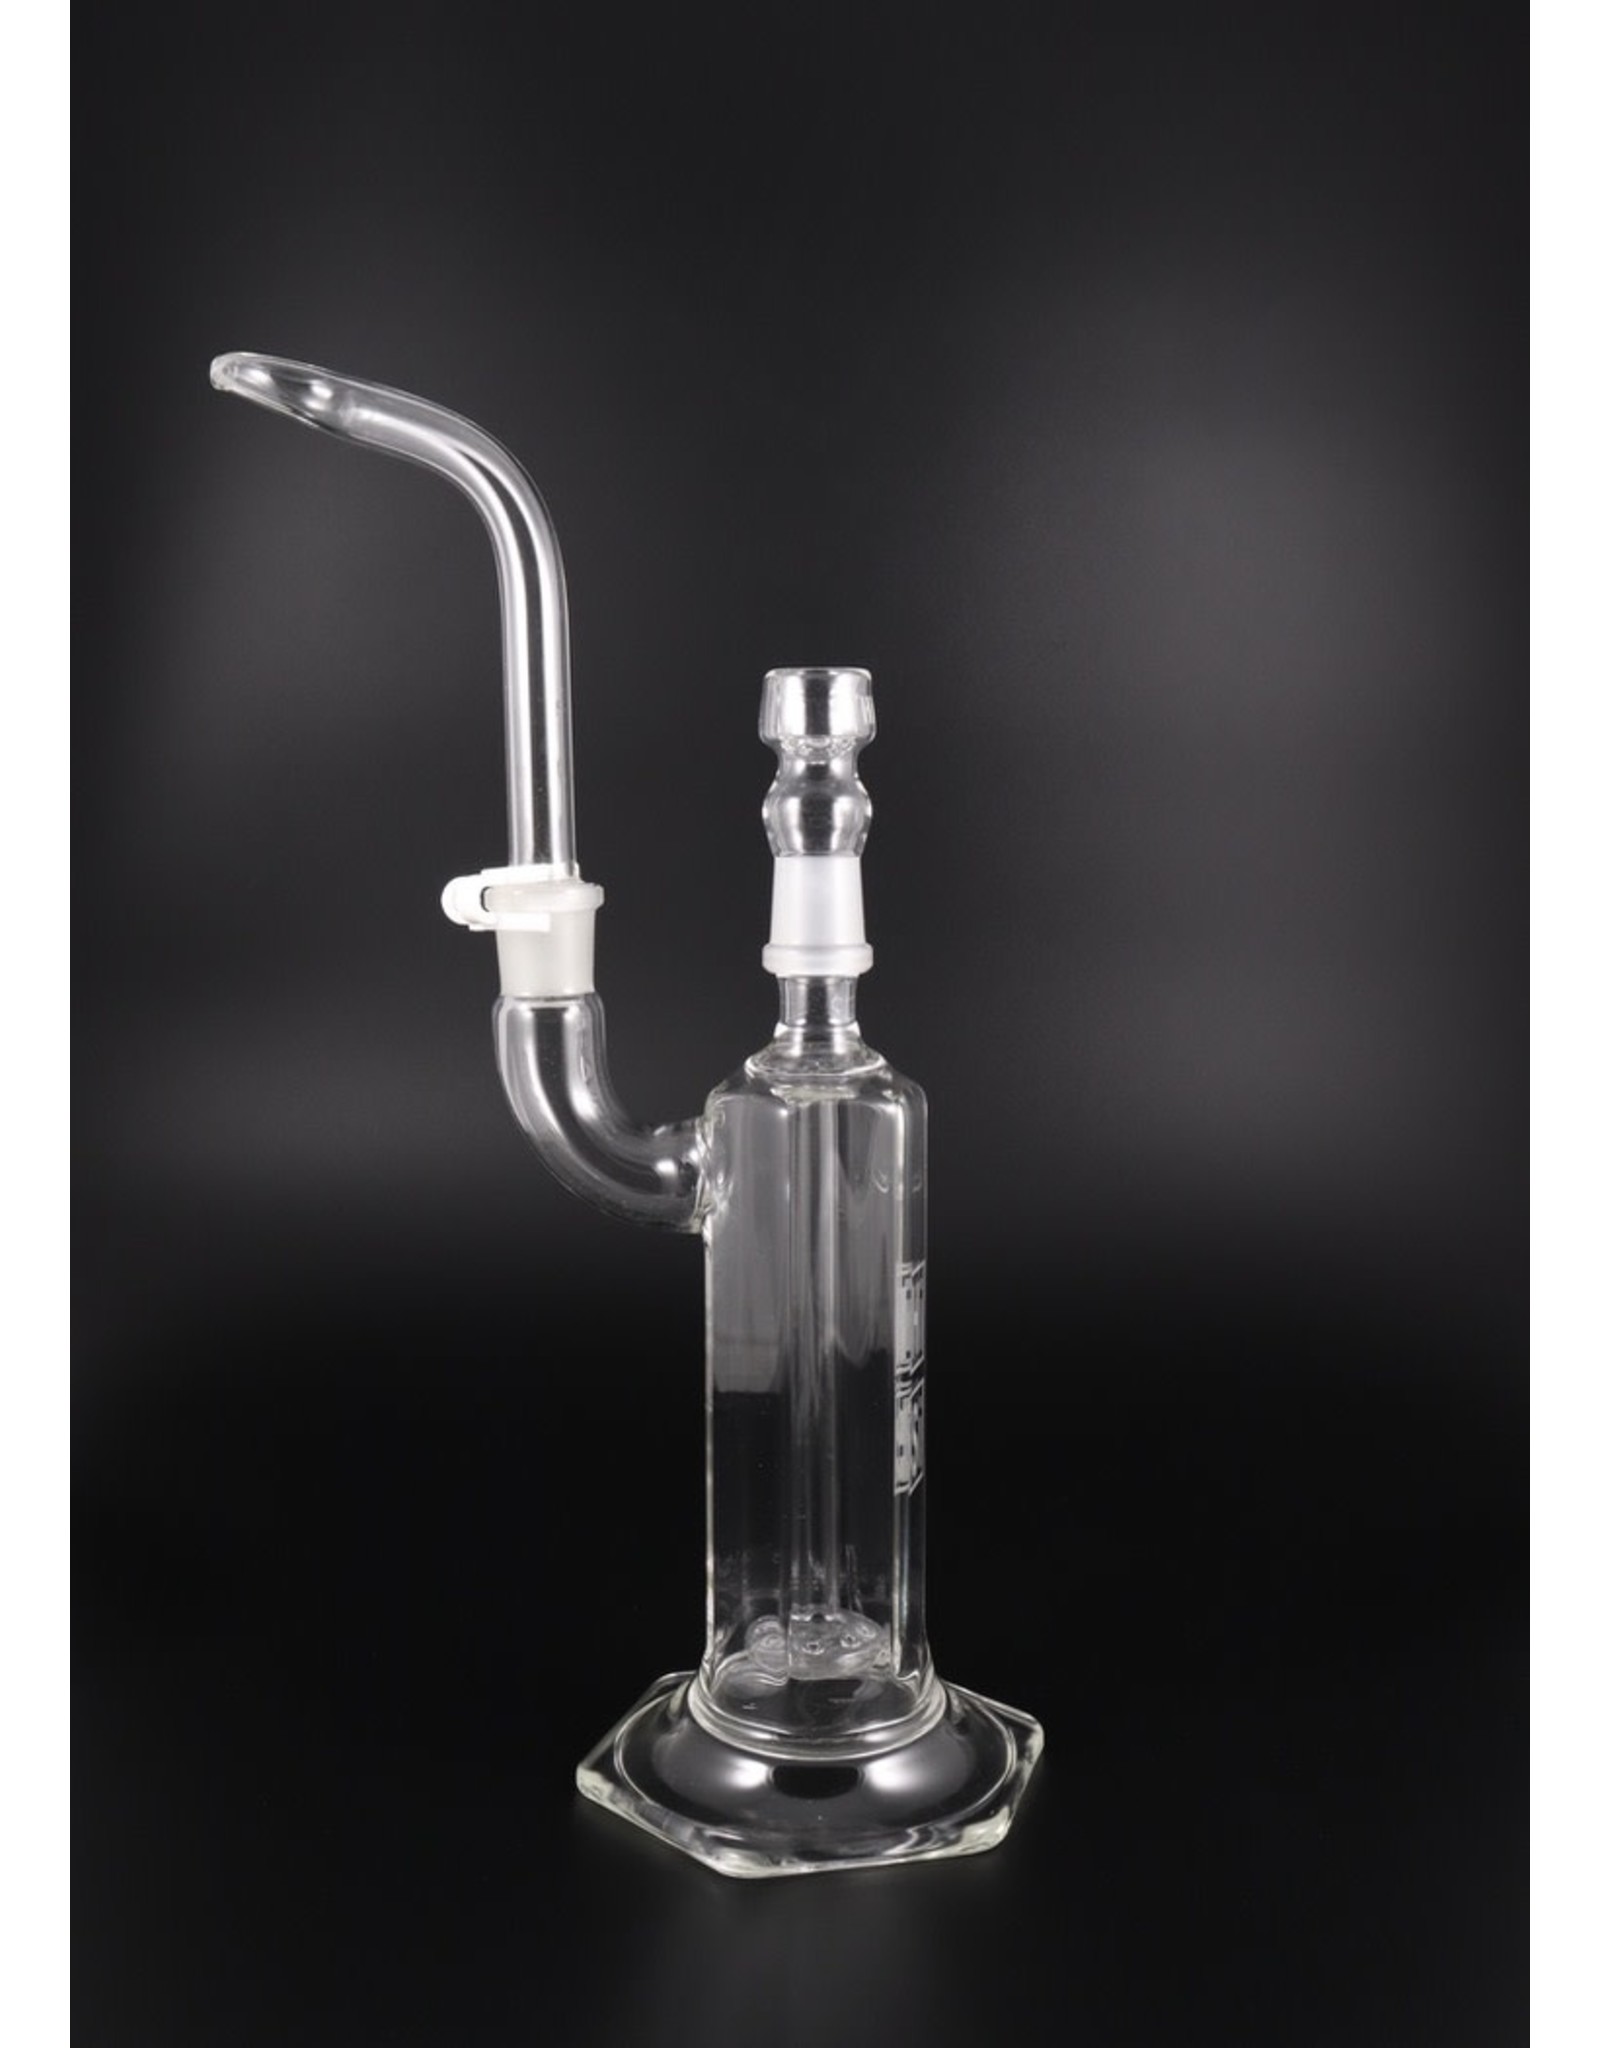 HiSi Glass Laboratory 8" Halo Diffuser w/ Female Bowl Rig Water Pipe